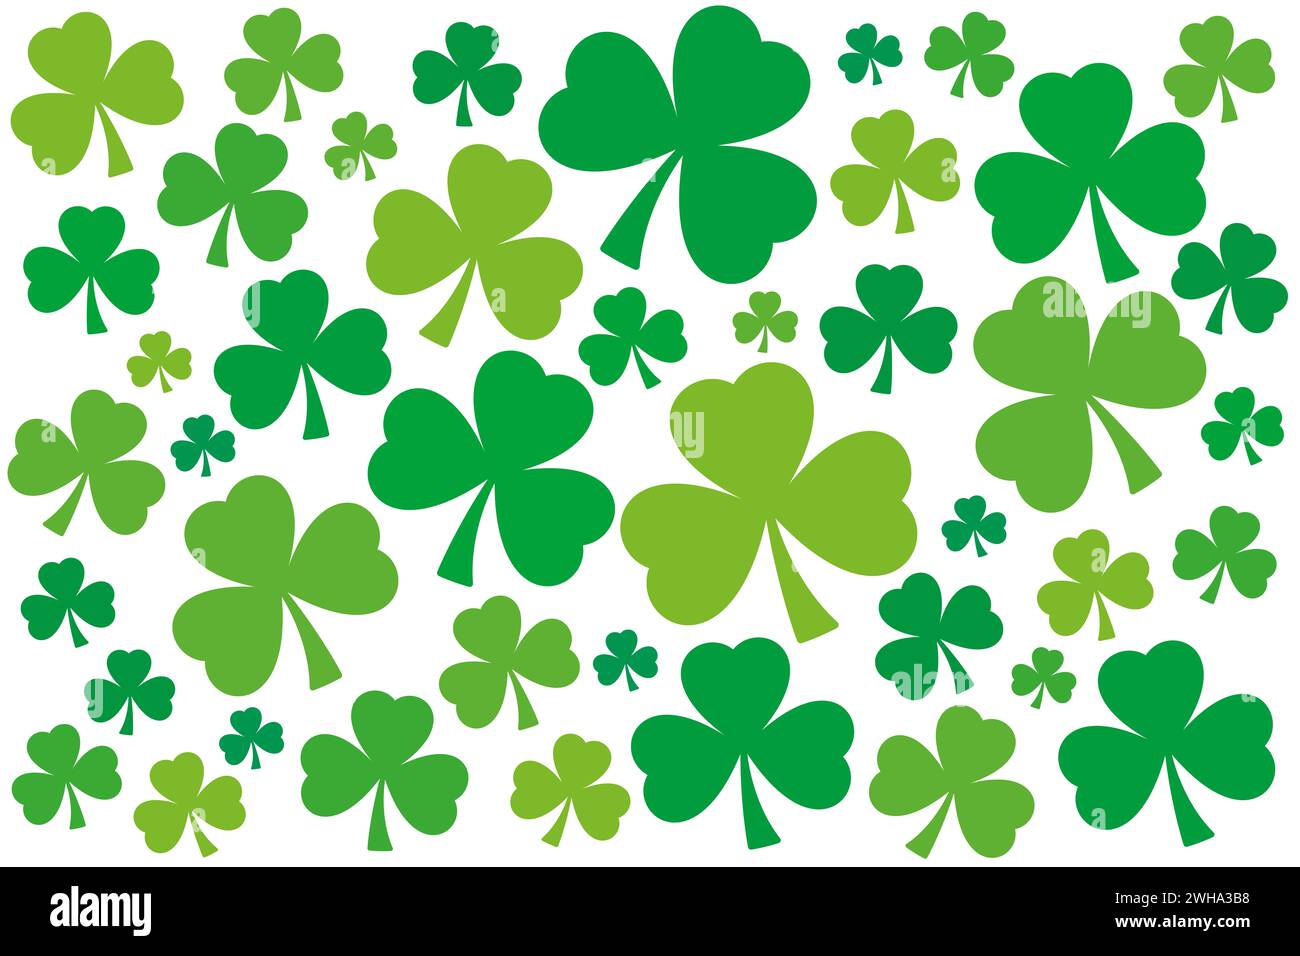 Numerous shamrocks, green three-leaf clover background. Randomly arranged, slightly twisted trefoils with different shades of green. Symbol of Ireland. Stock Photo